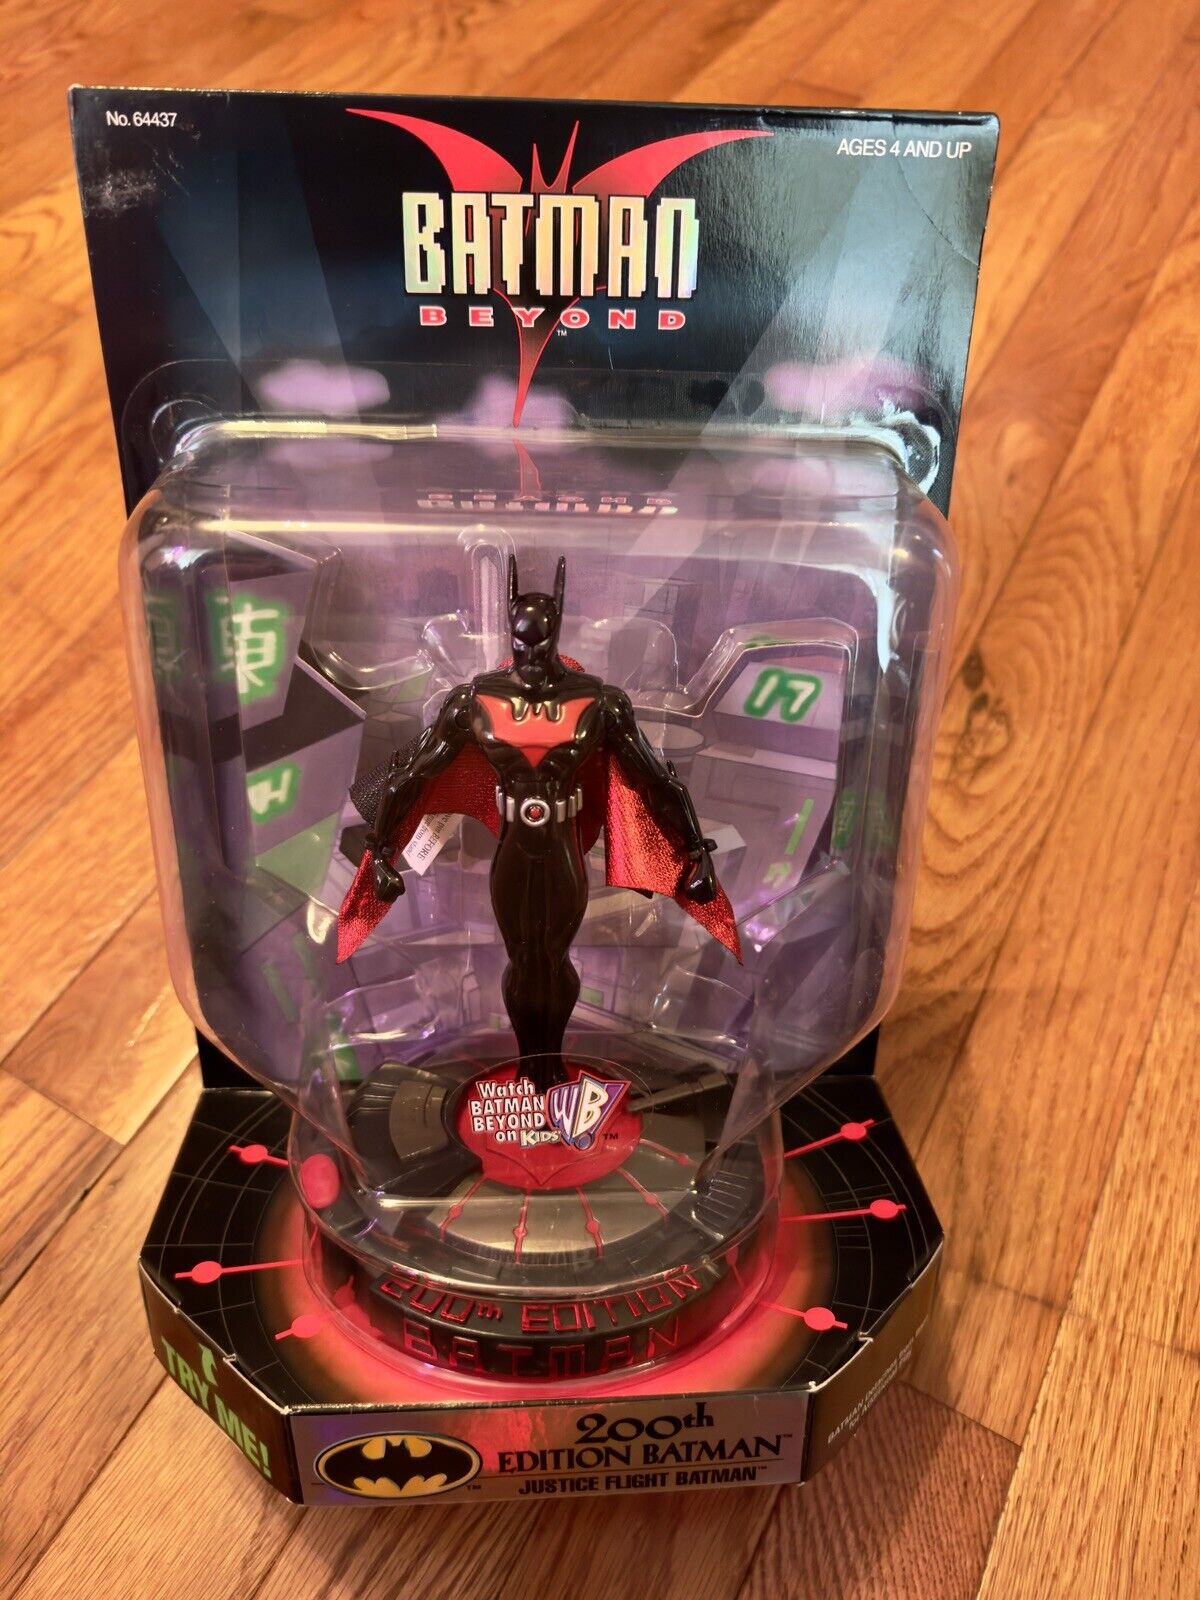 Batman Beyond 200th Edition Batman, Justice Flight Batman Hasbro NIB